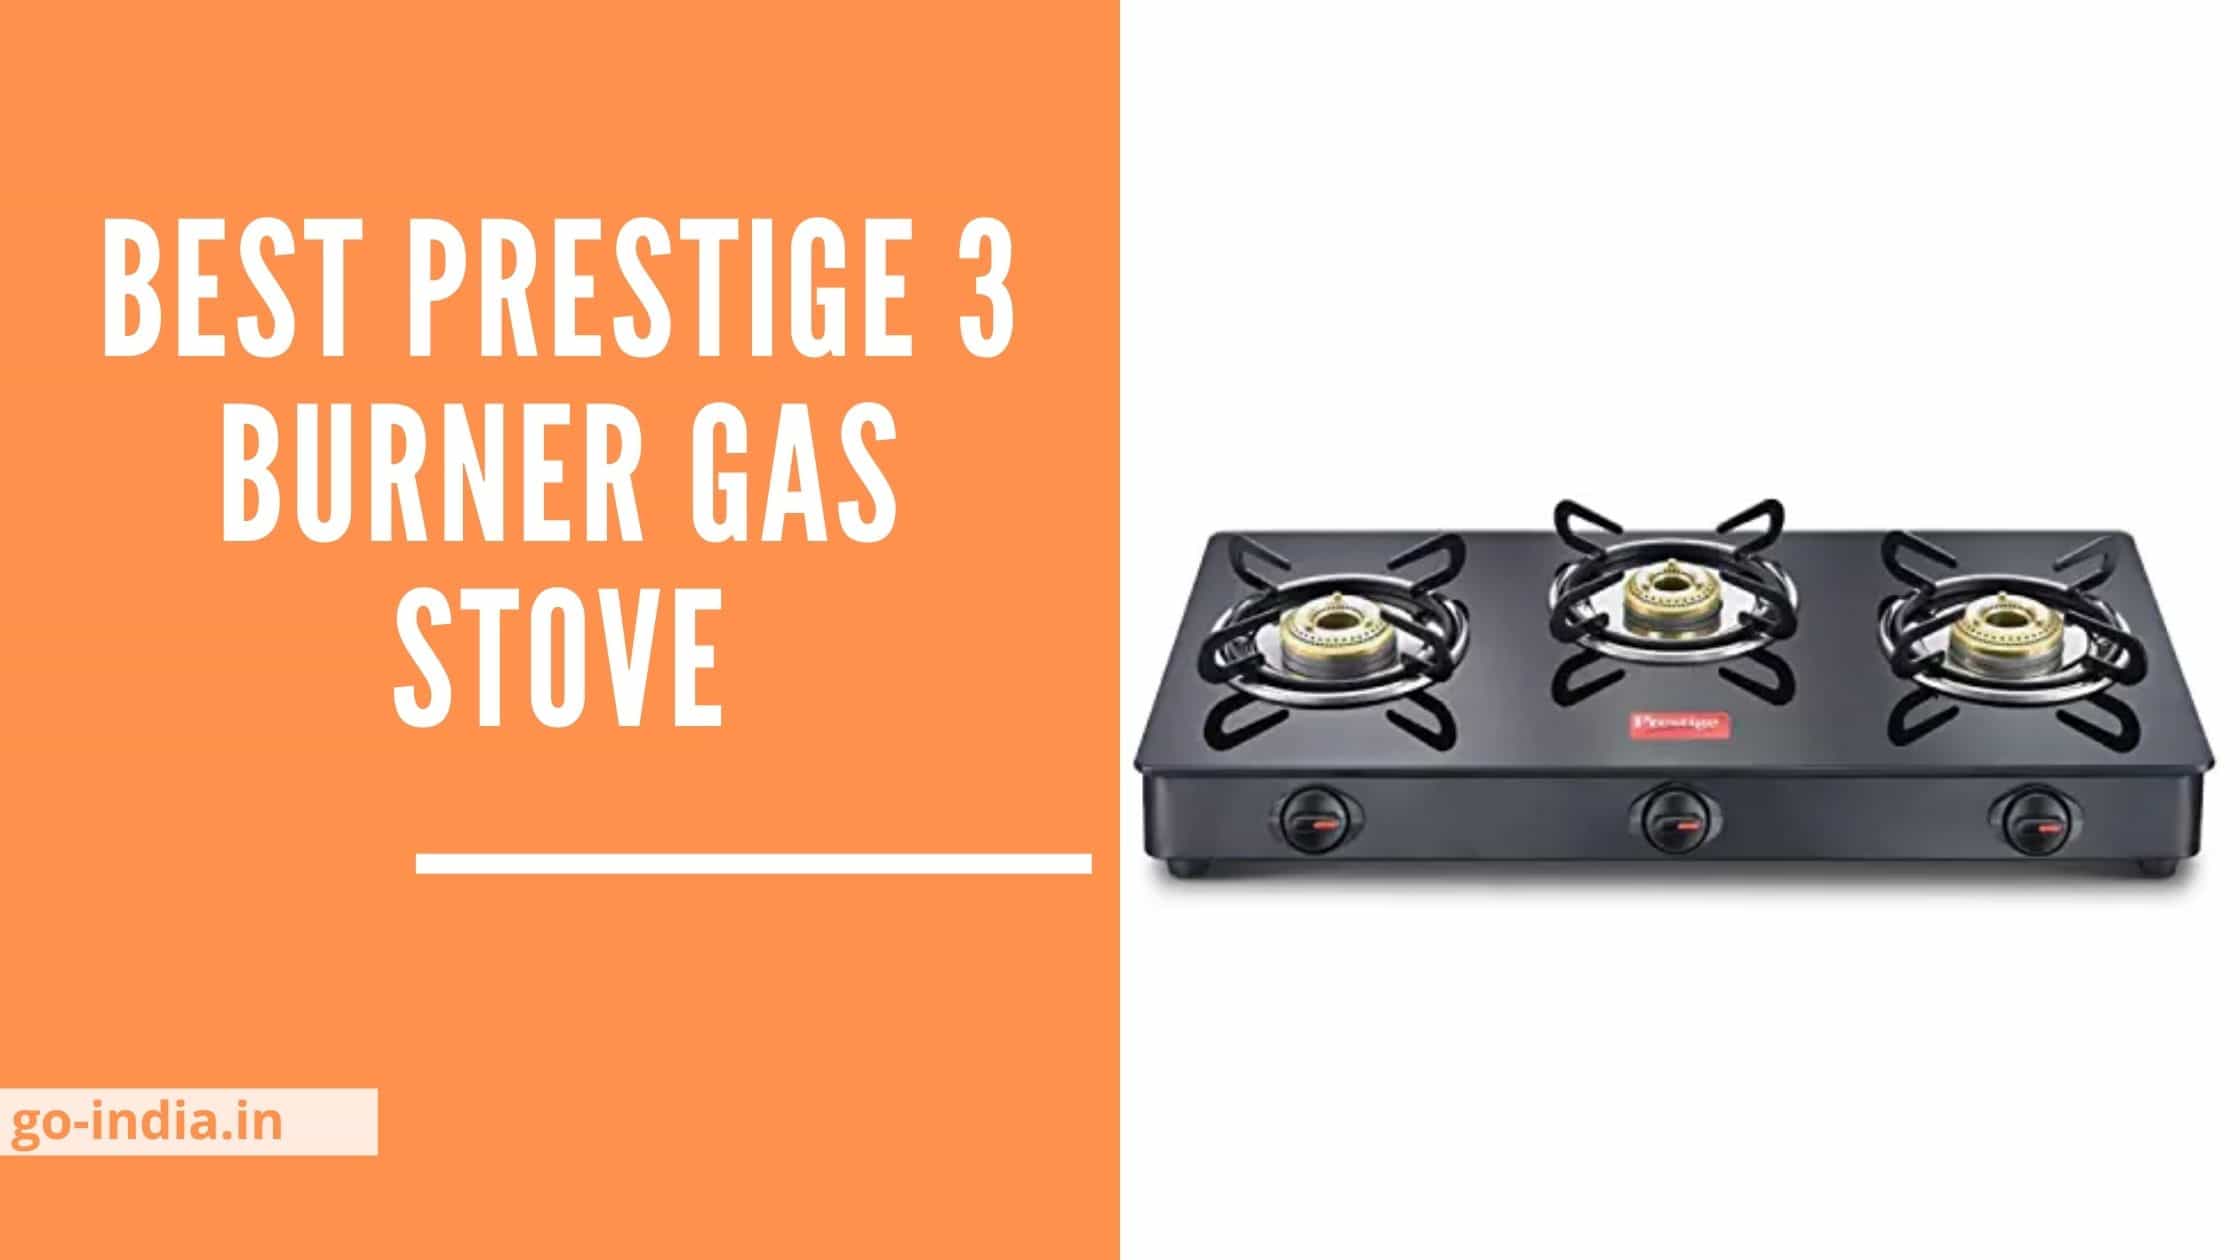 Best Prestige 3 Burner Gas Stove